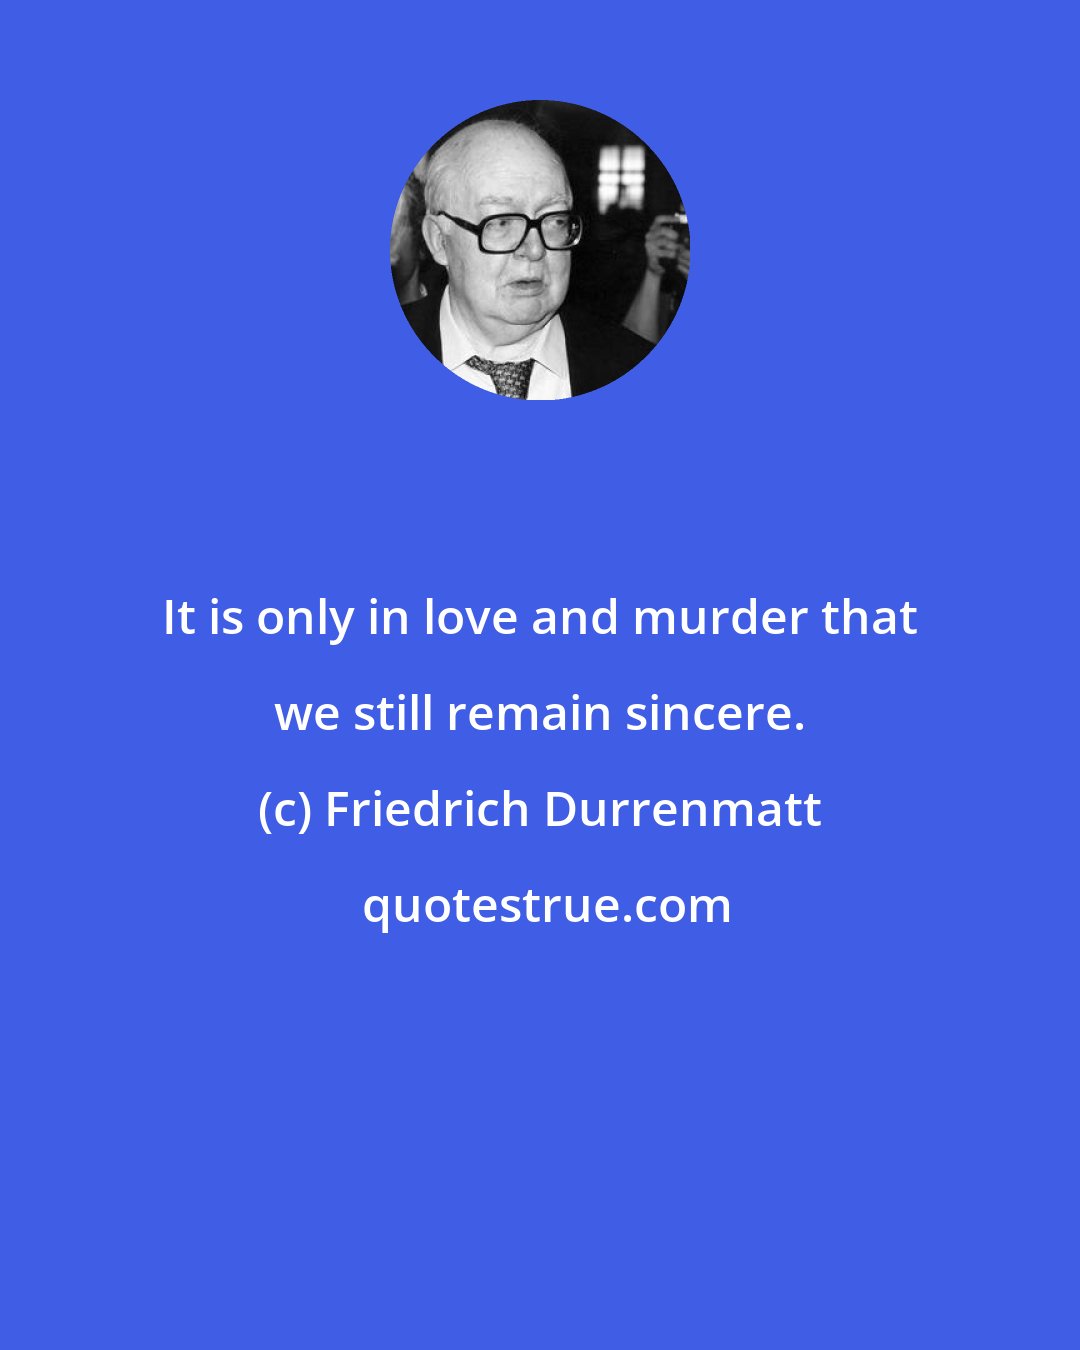 Friedrich Durrenmatt: It is only in love and murder that we still remain sincere.